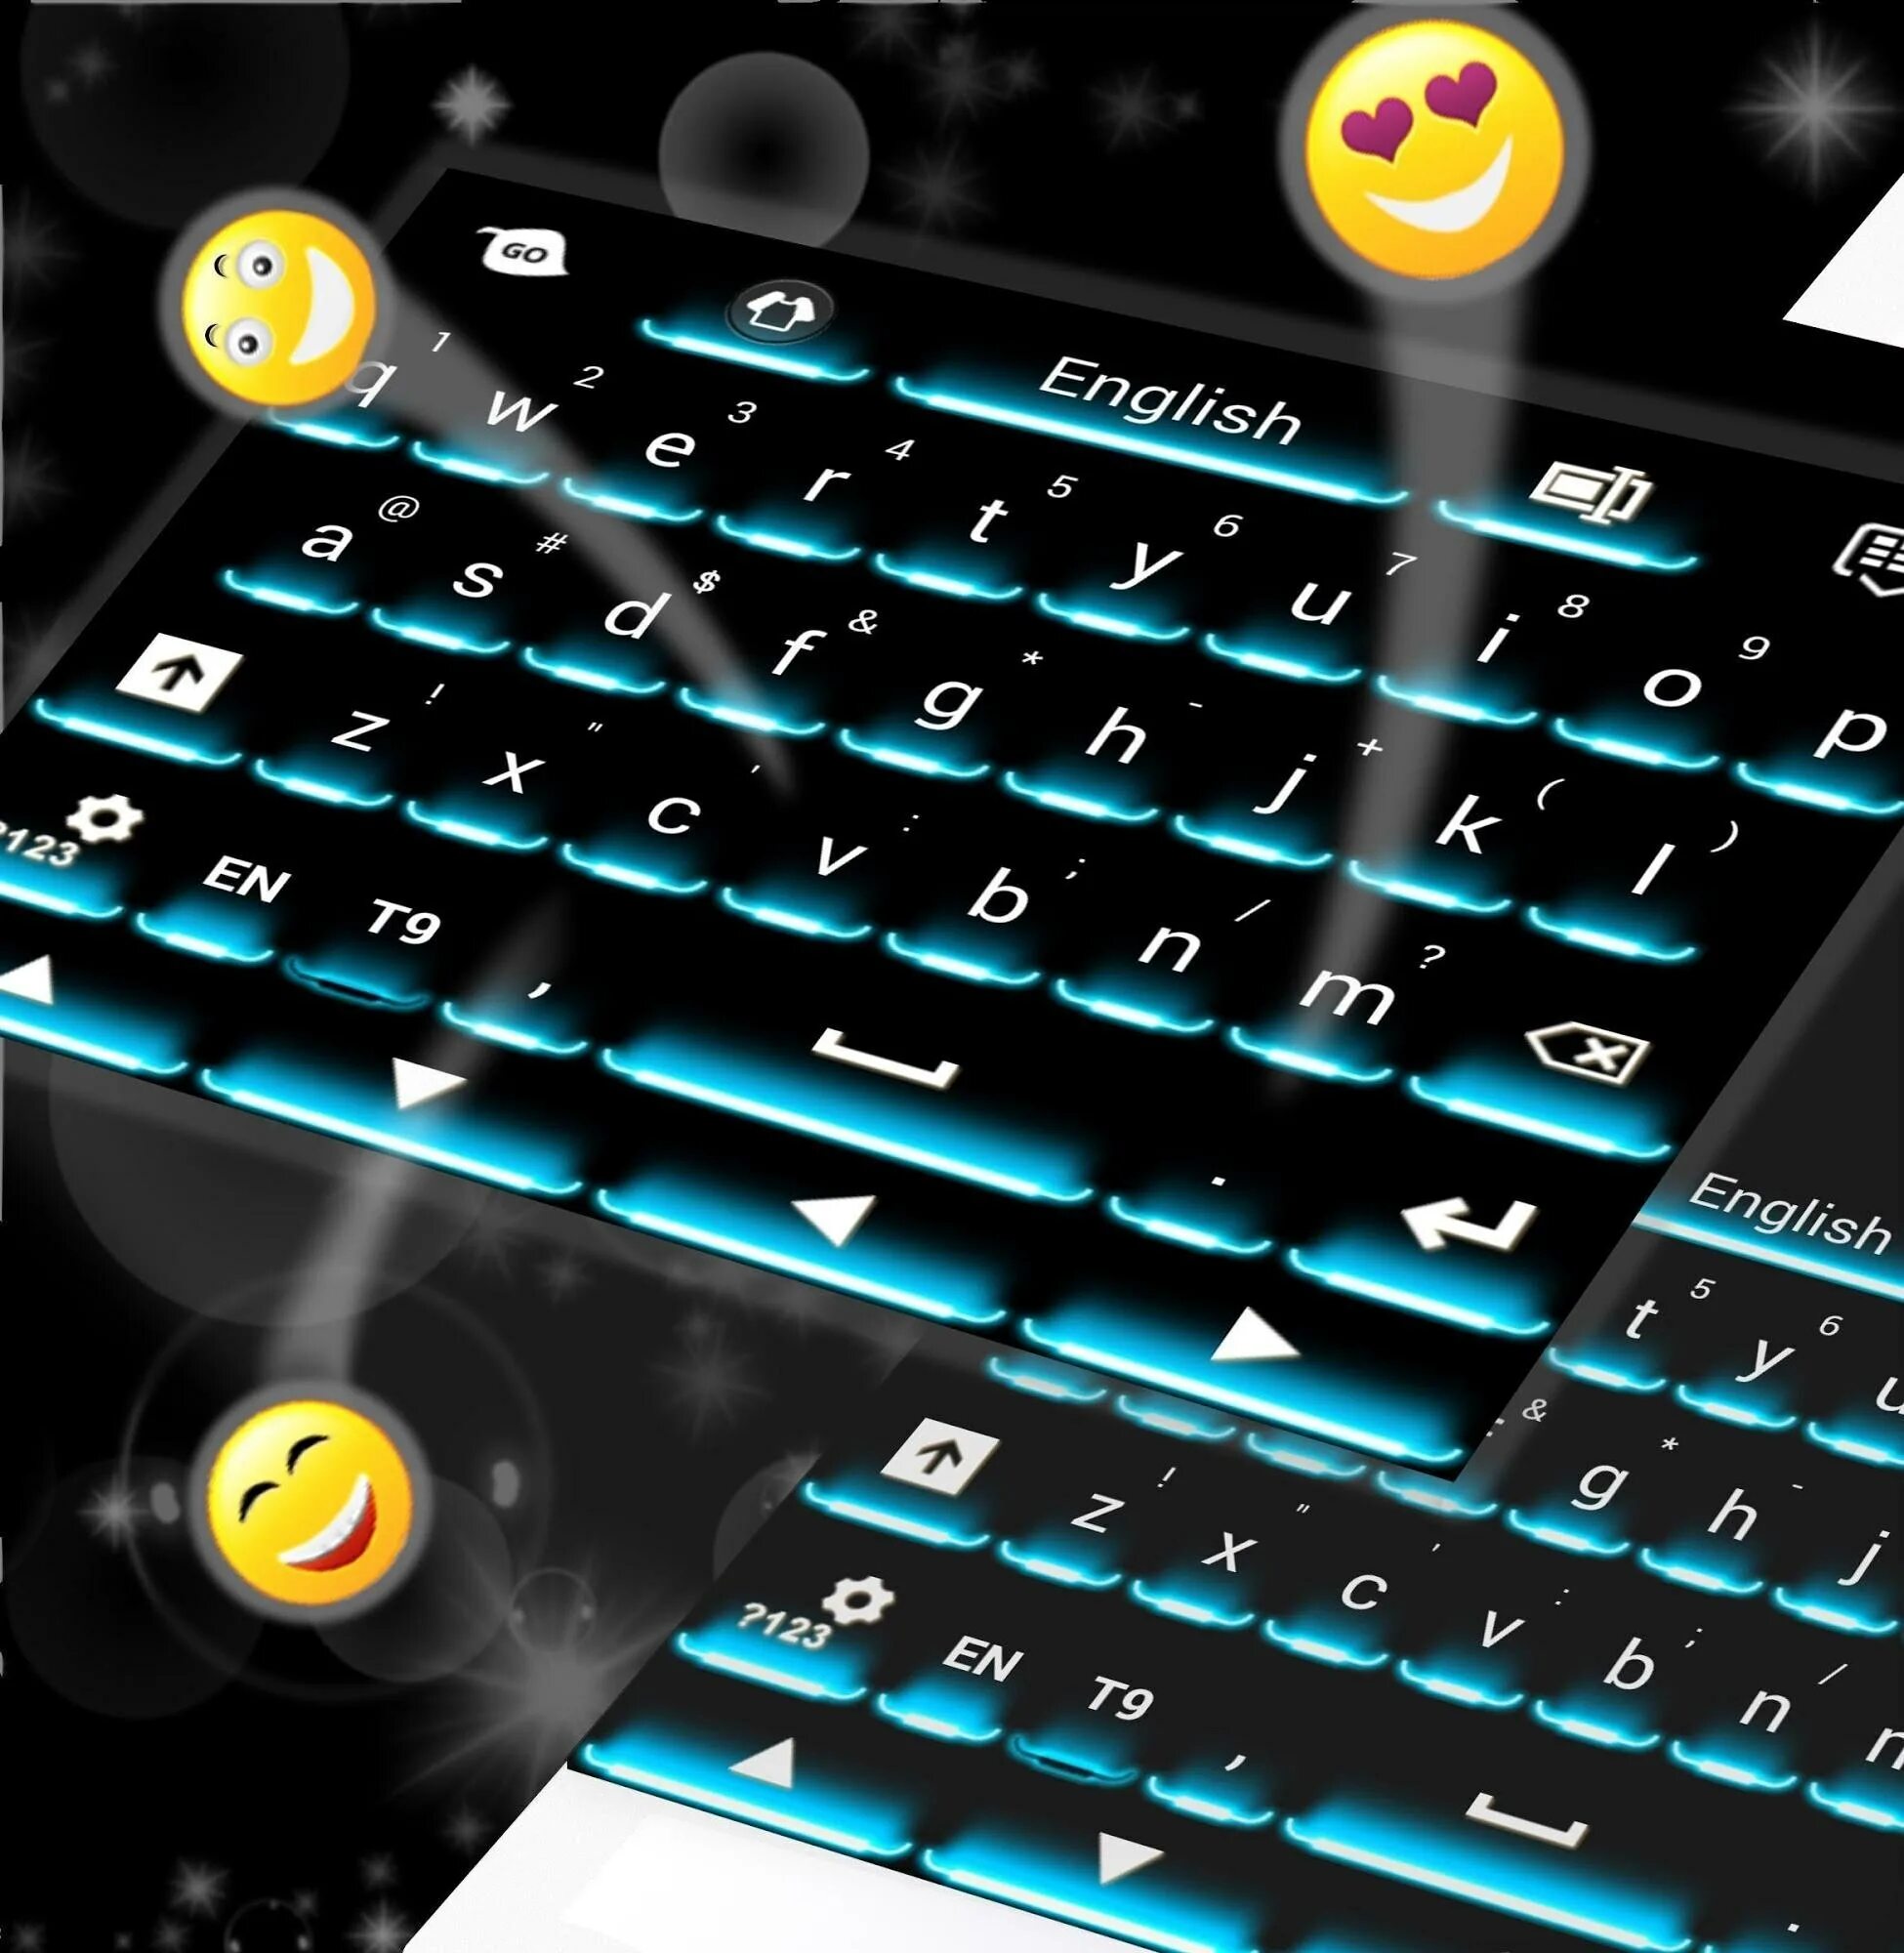 Красивые клавиатуры на андроид. Клавиатура андроид. Неоновая клавиатура. Темы для клавиатуры. Темы для клавиатуры на андроид.